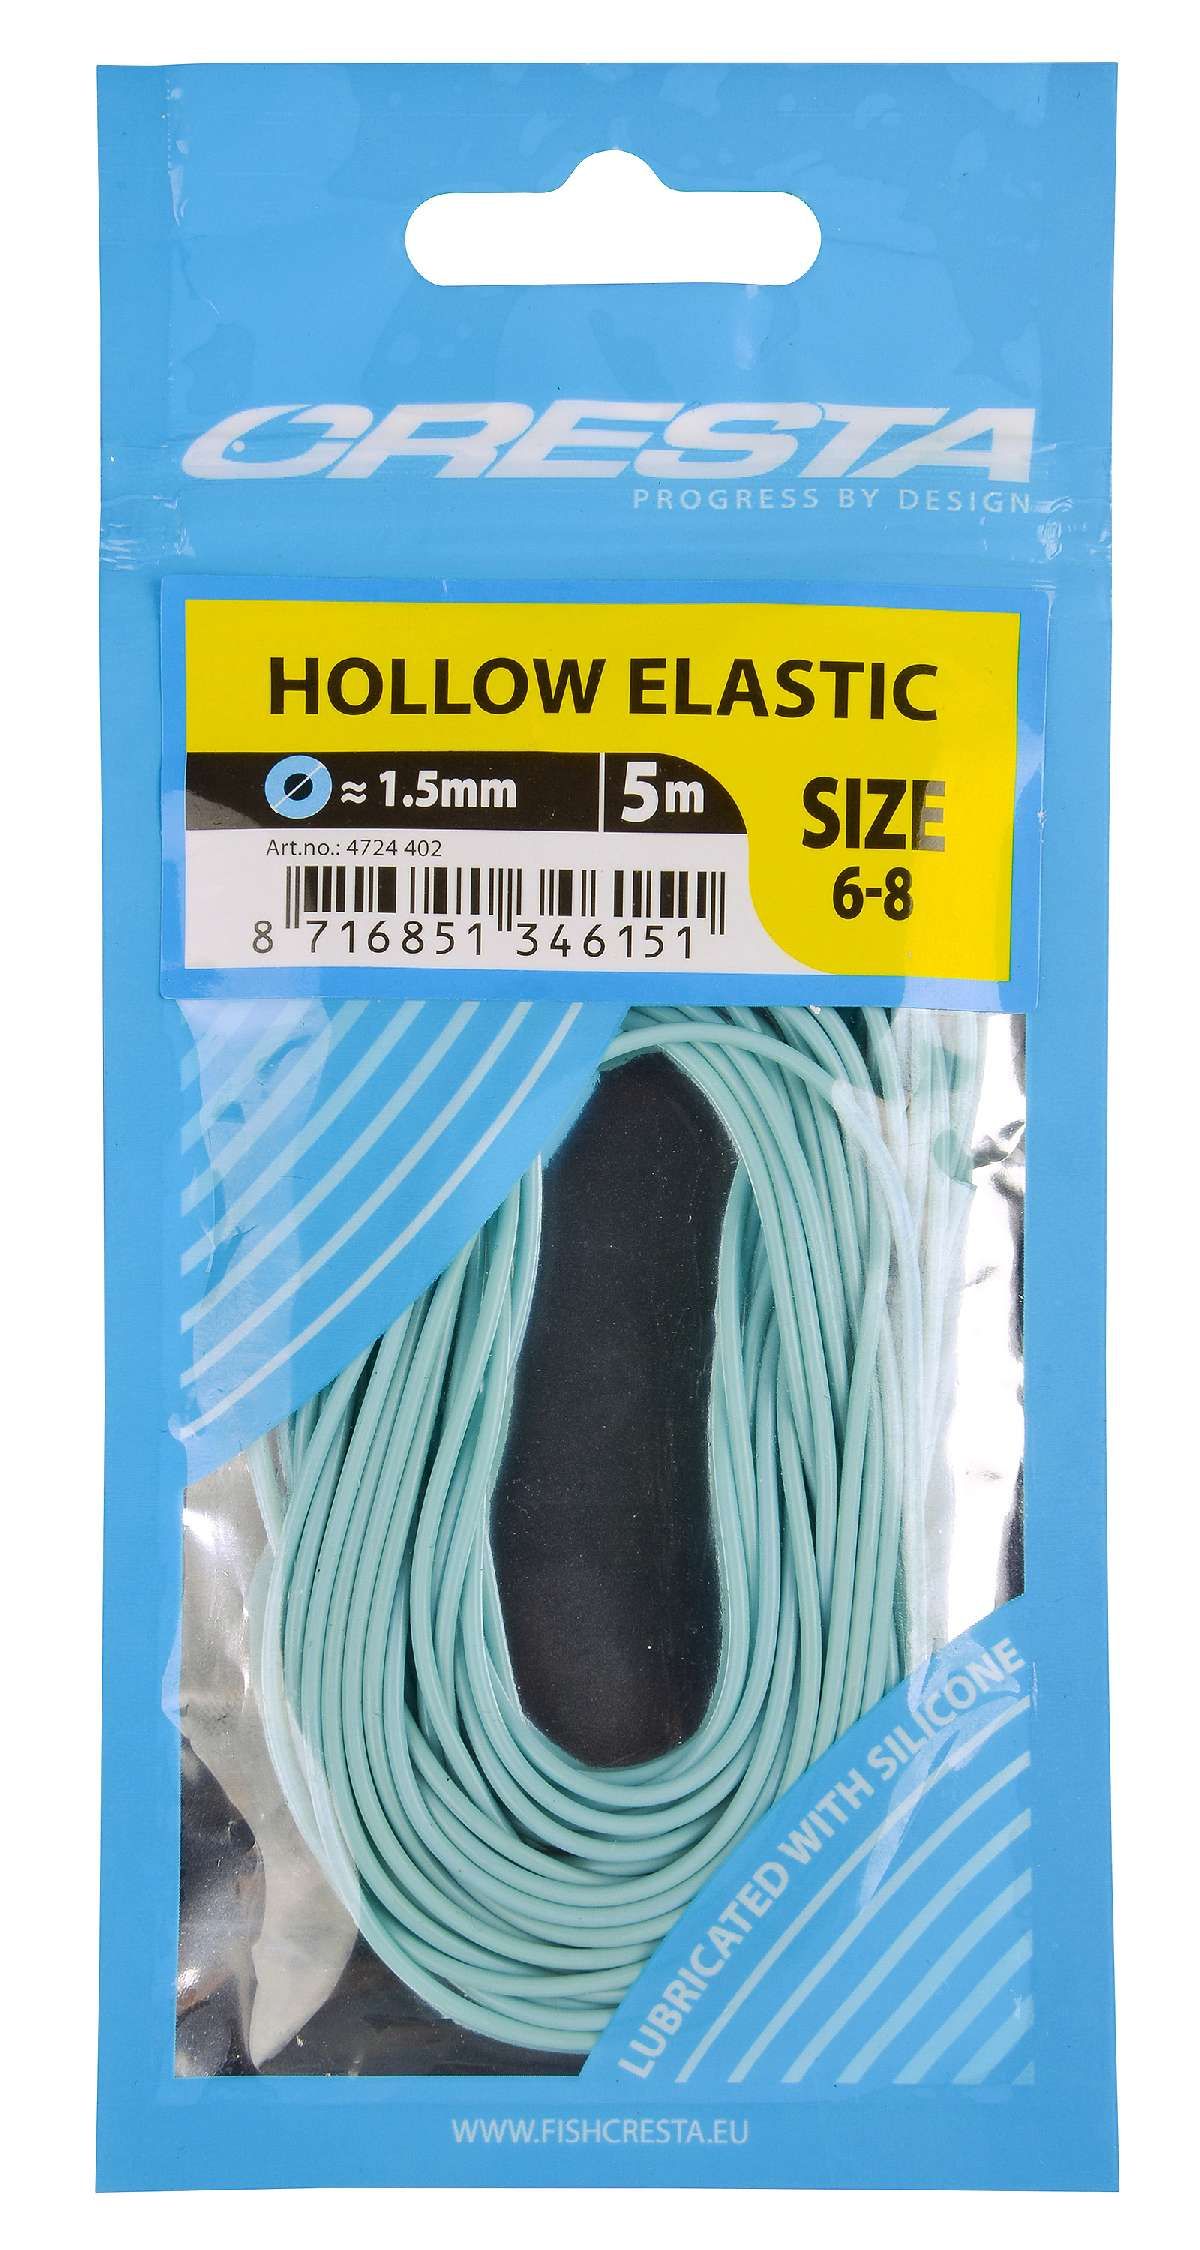 Cresta Hollow Elastic 1.5 mm  5 m  Light Blue